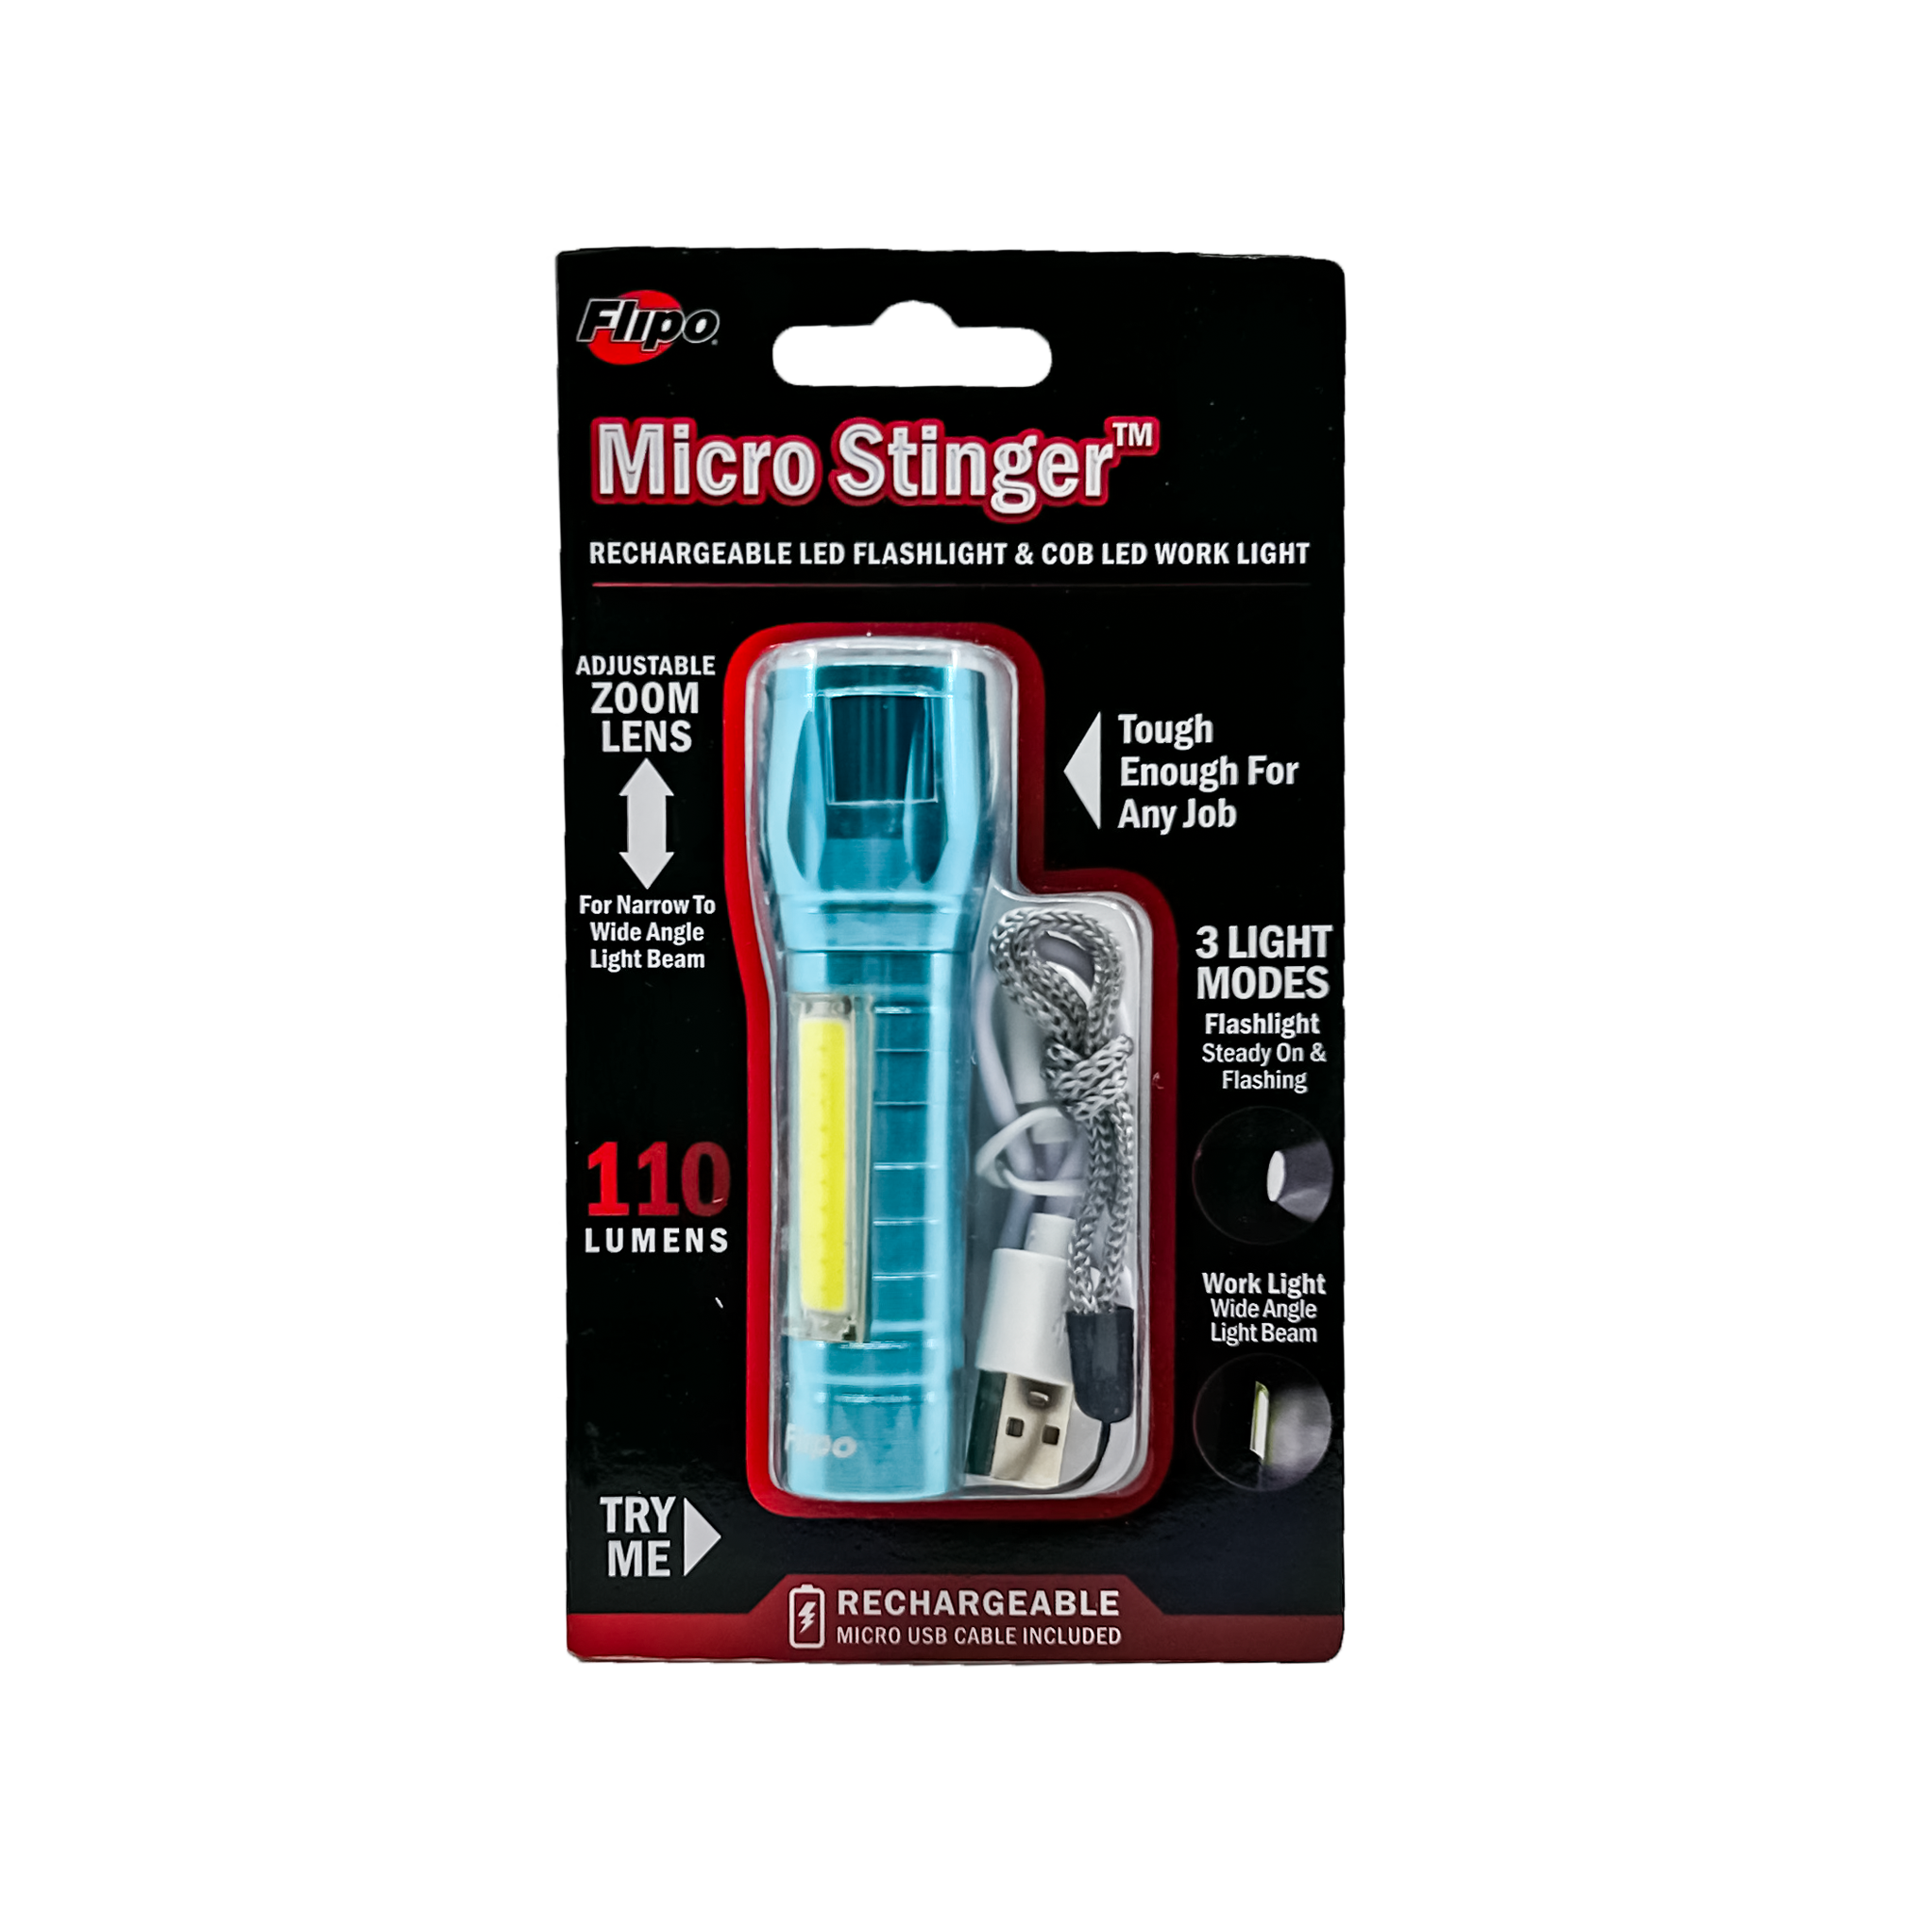 Micro Stinger Color Rechargeable LED Flashlight & COB LED Work Light